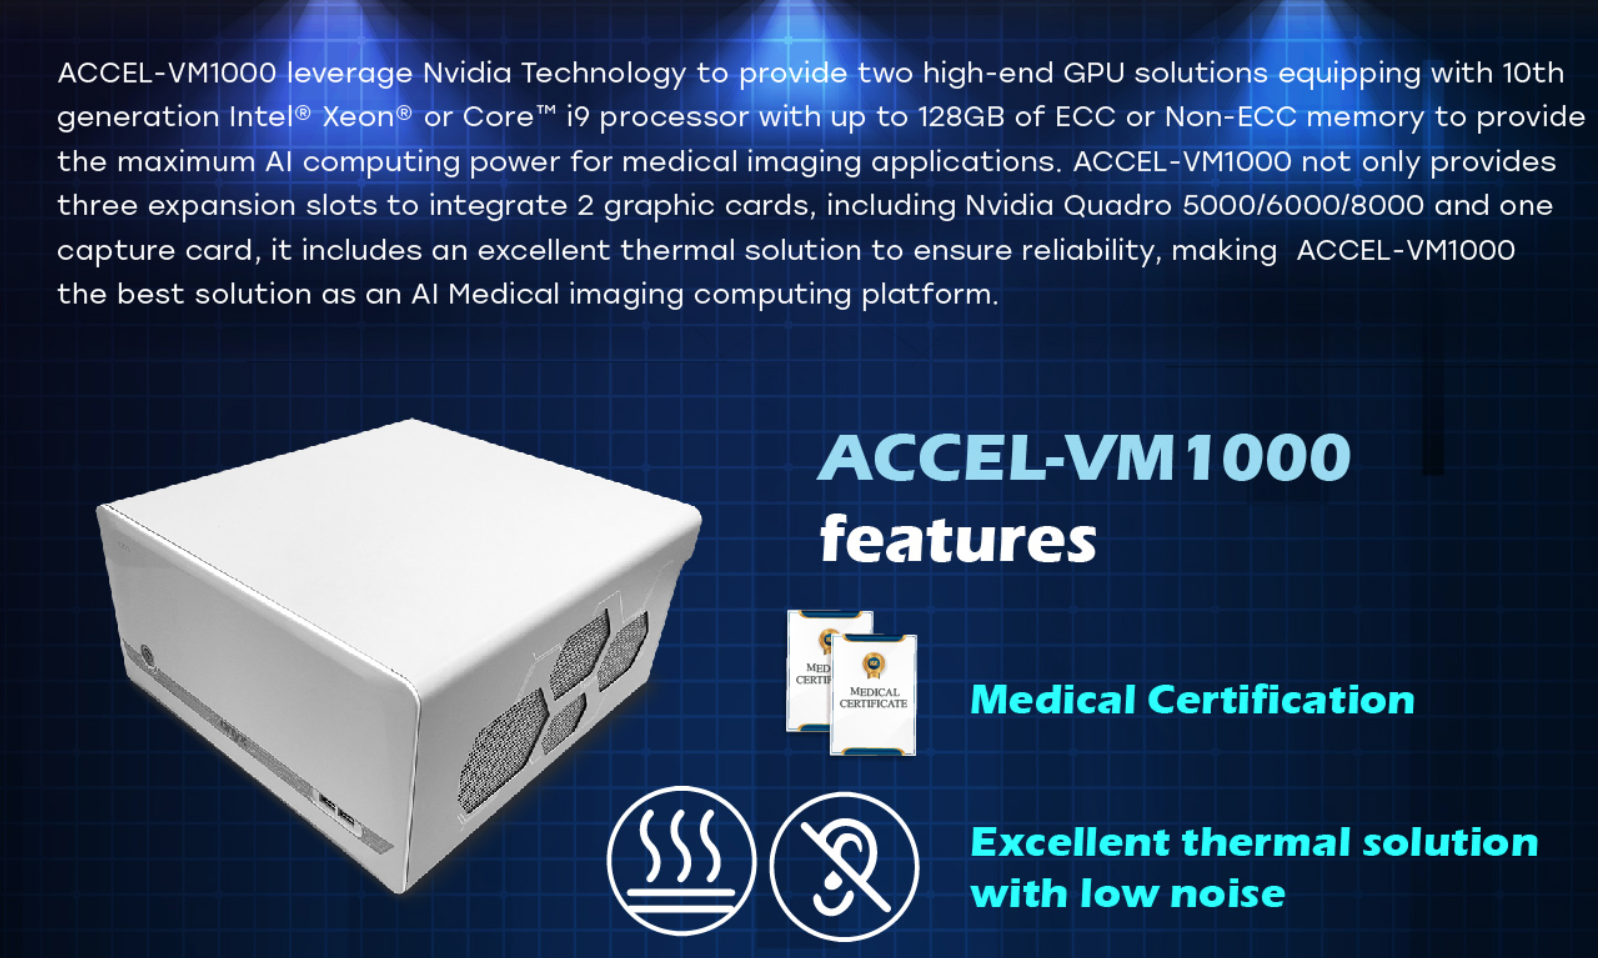 ACCEL-VM1000 features 1